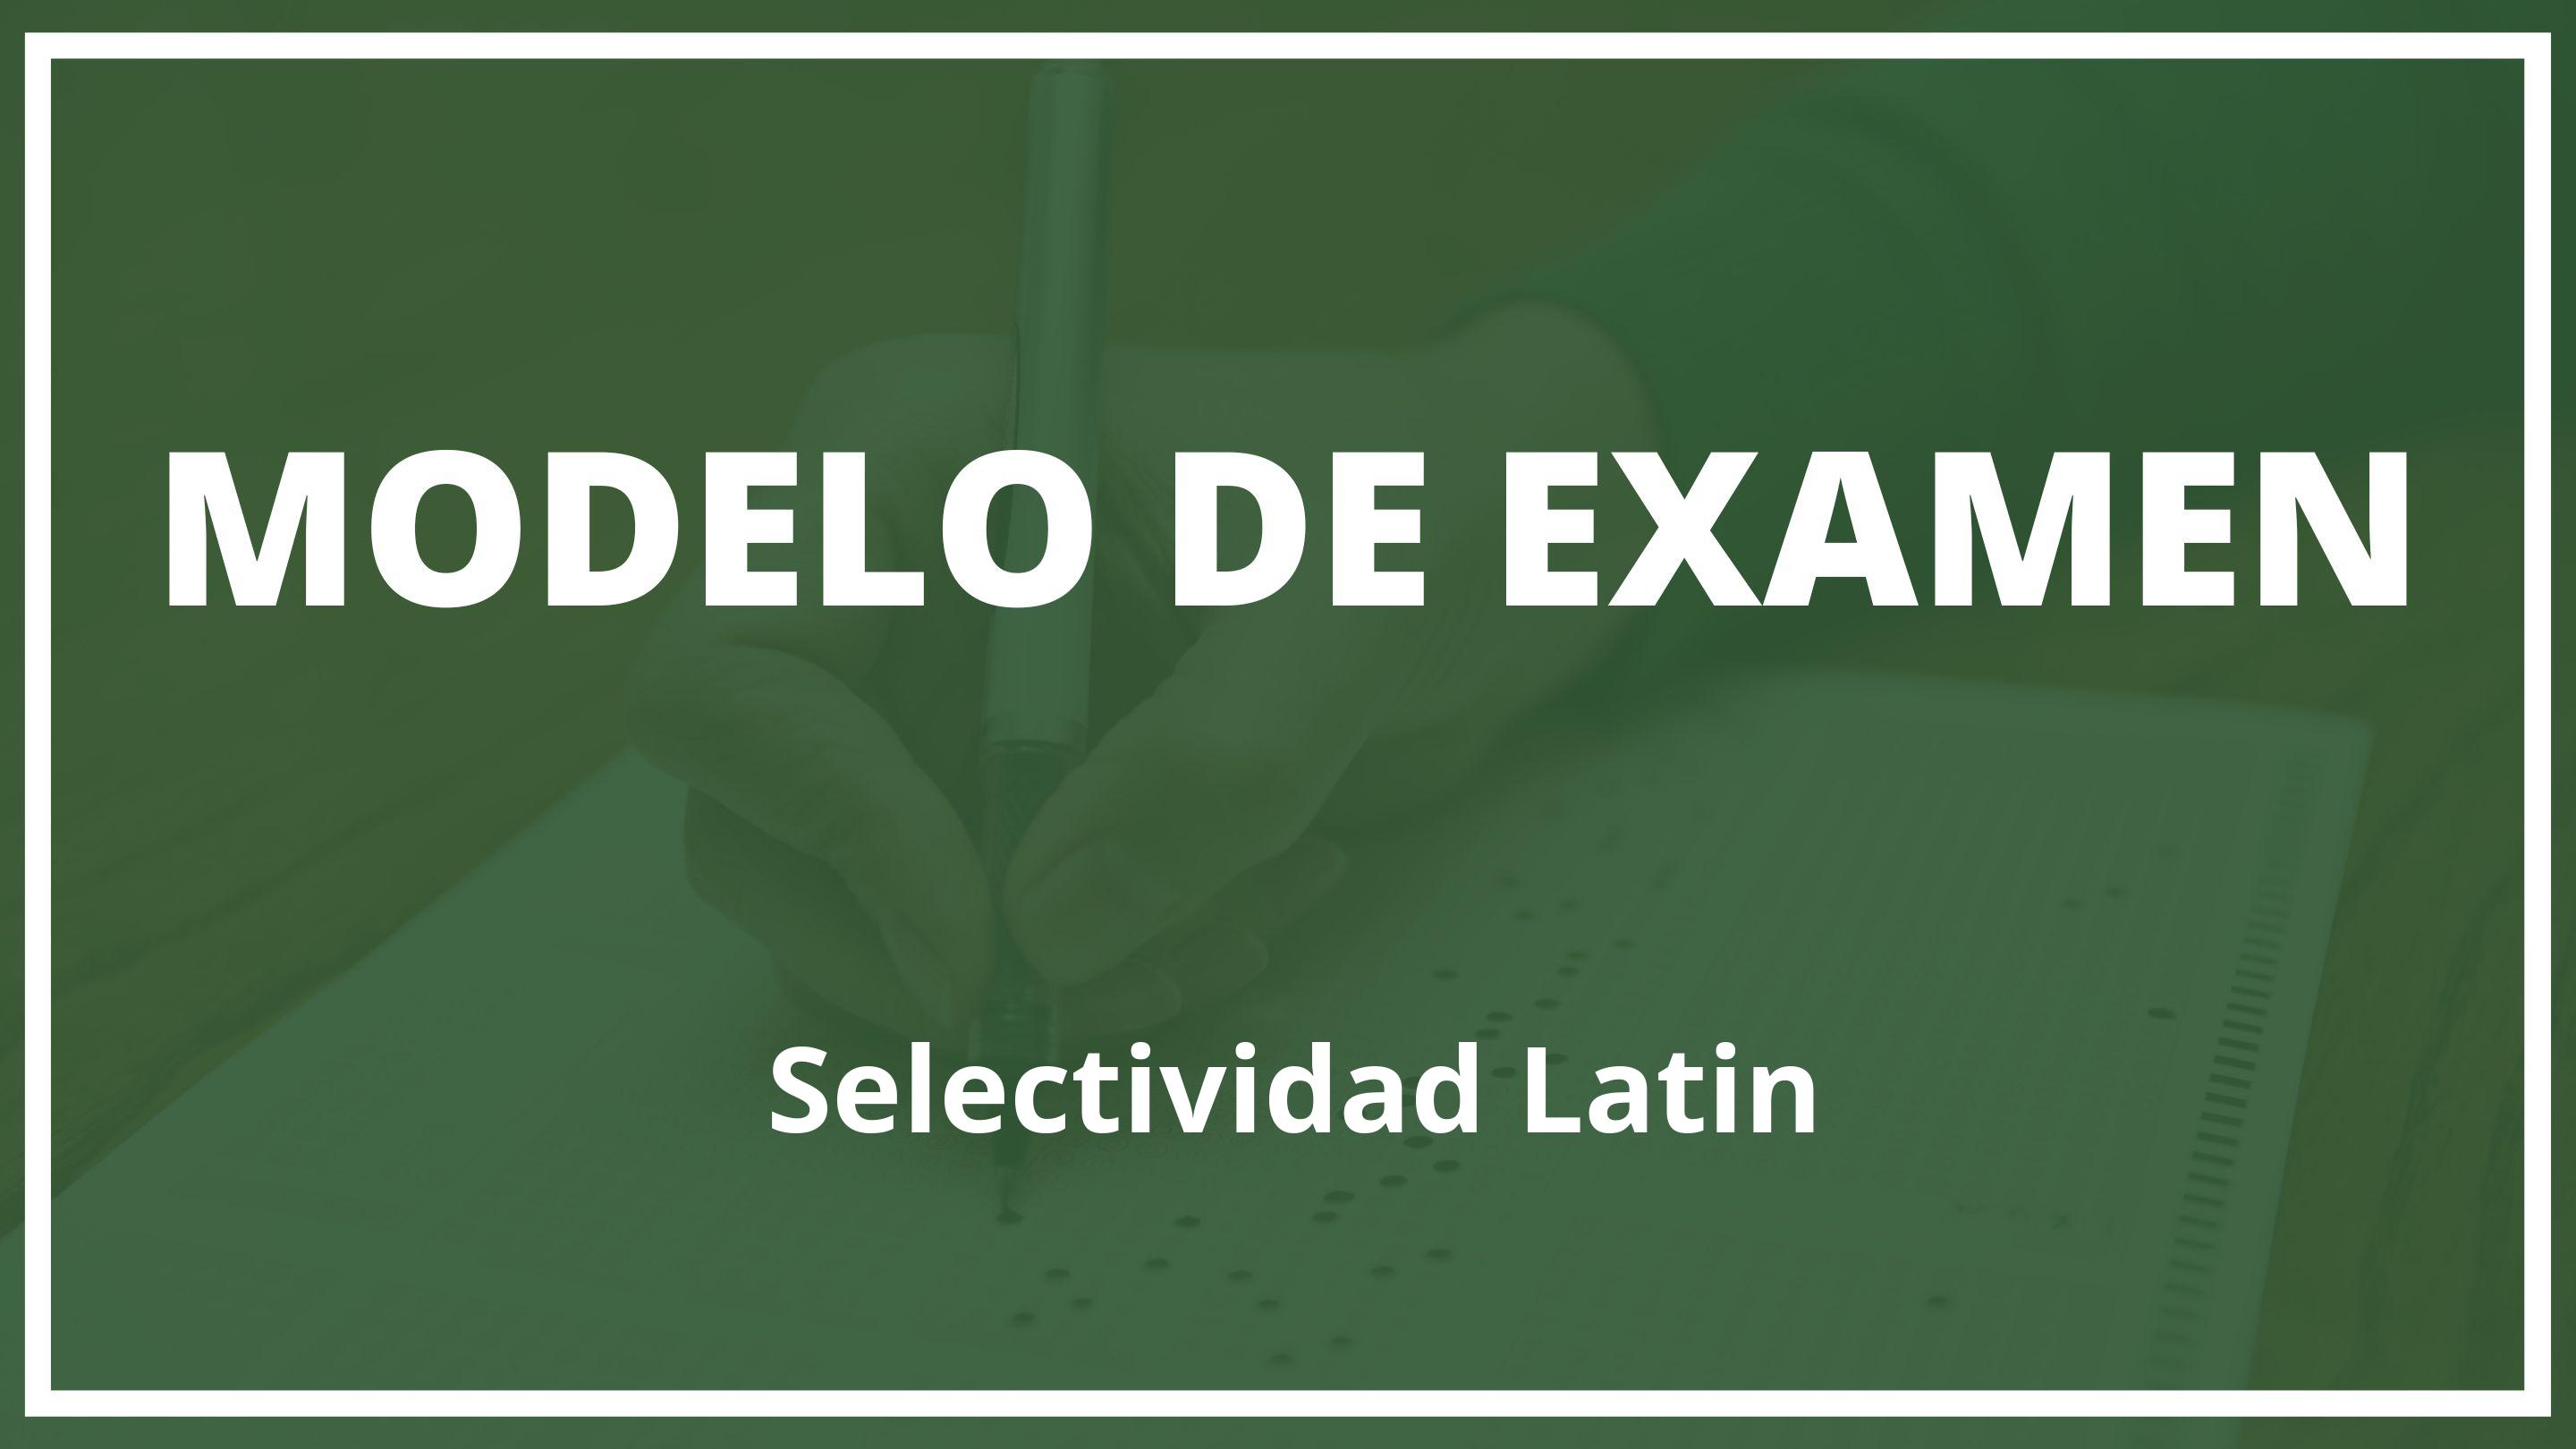 Examen Selectividad Latin